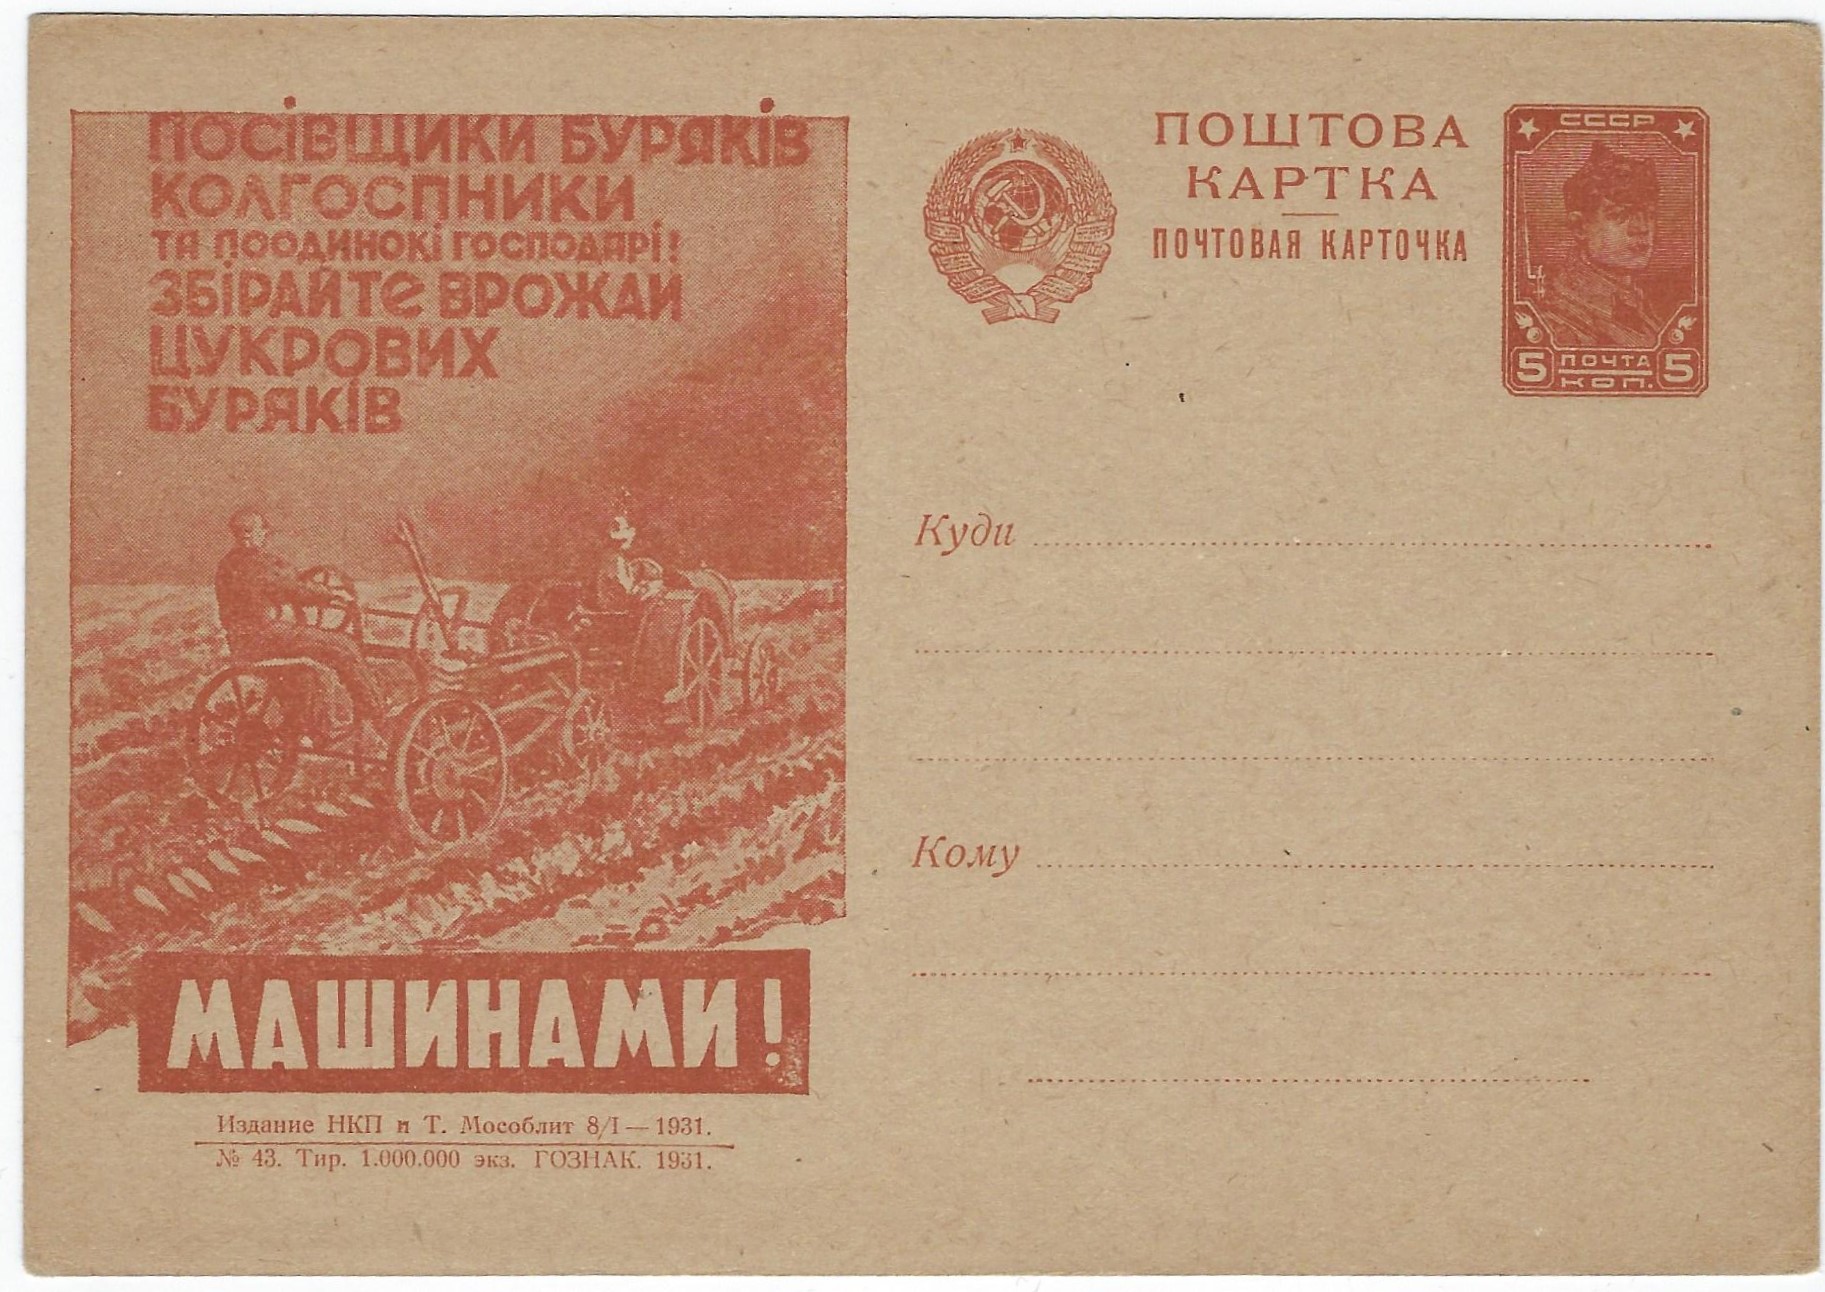 Postal Stationery - Soviet Union POSTCARDS Scott 3443 Michel P104-43 